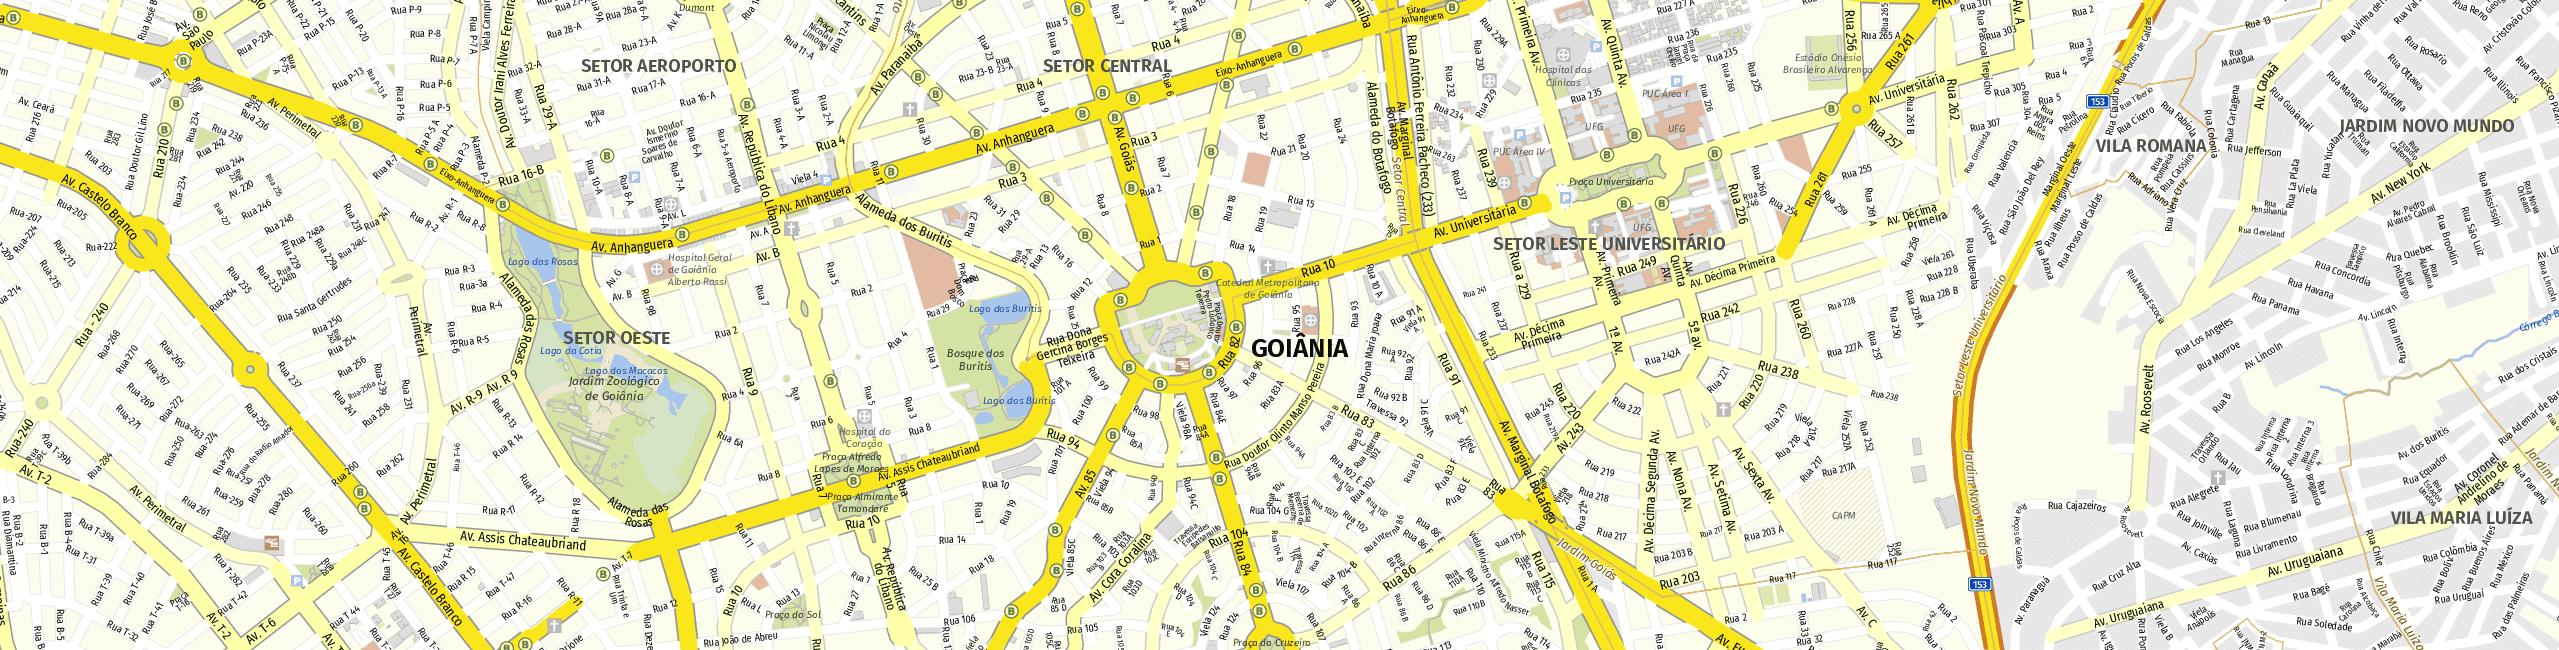 Stadtplan Goiânia zum Downloaden.